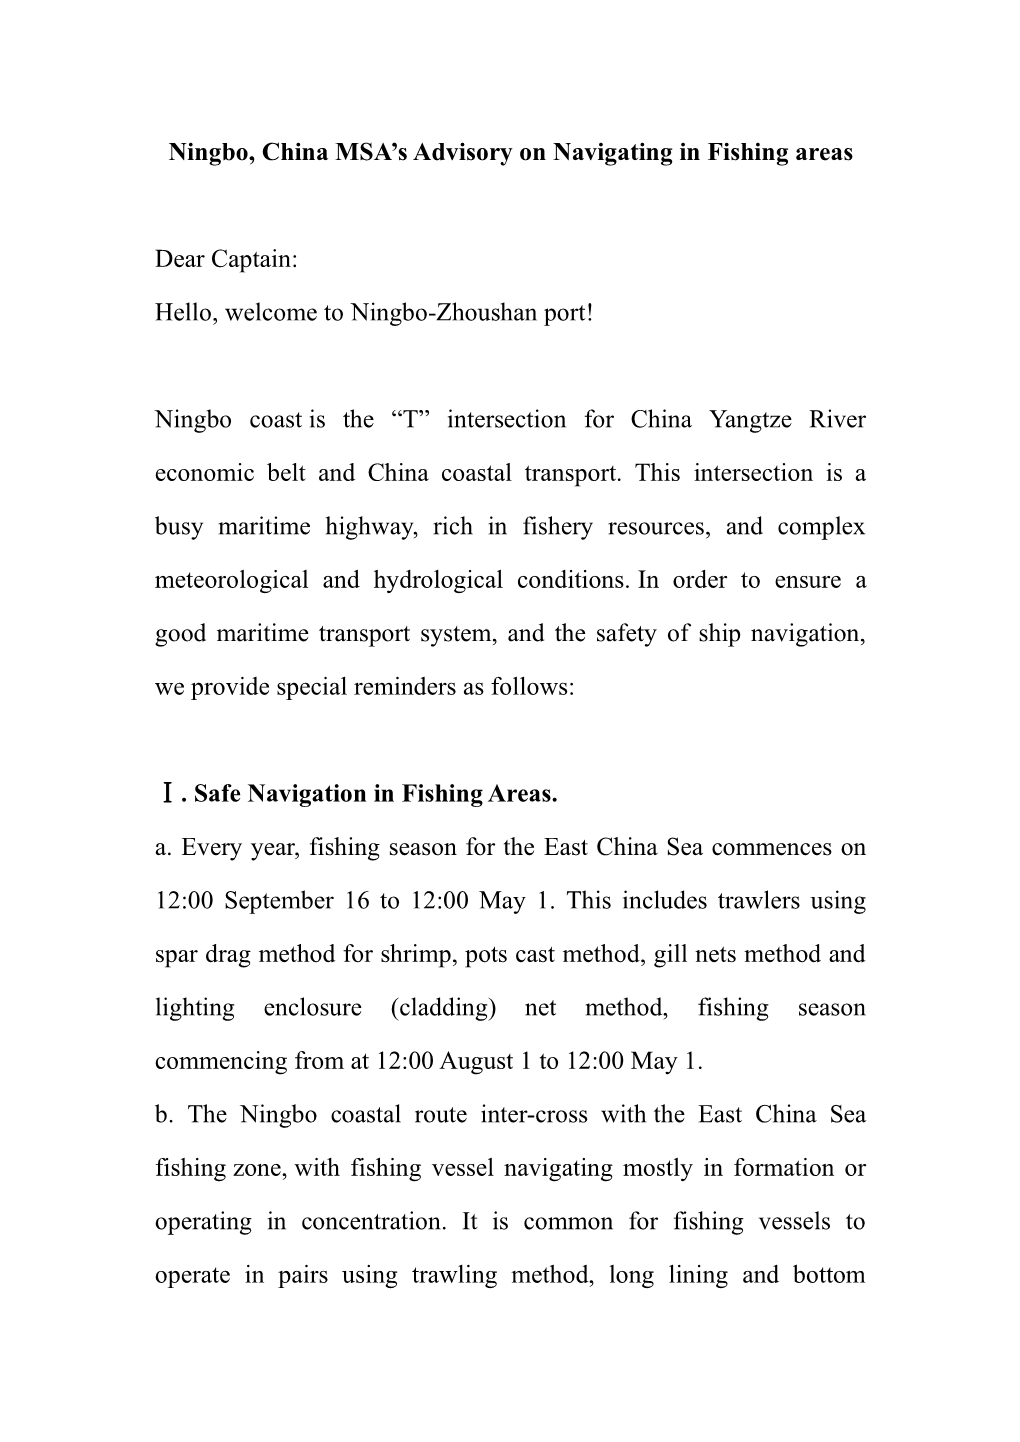 Ningbo, China MSA's Advisory on Navigating in Fishing Areas